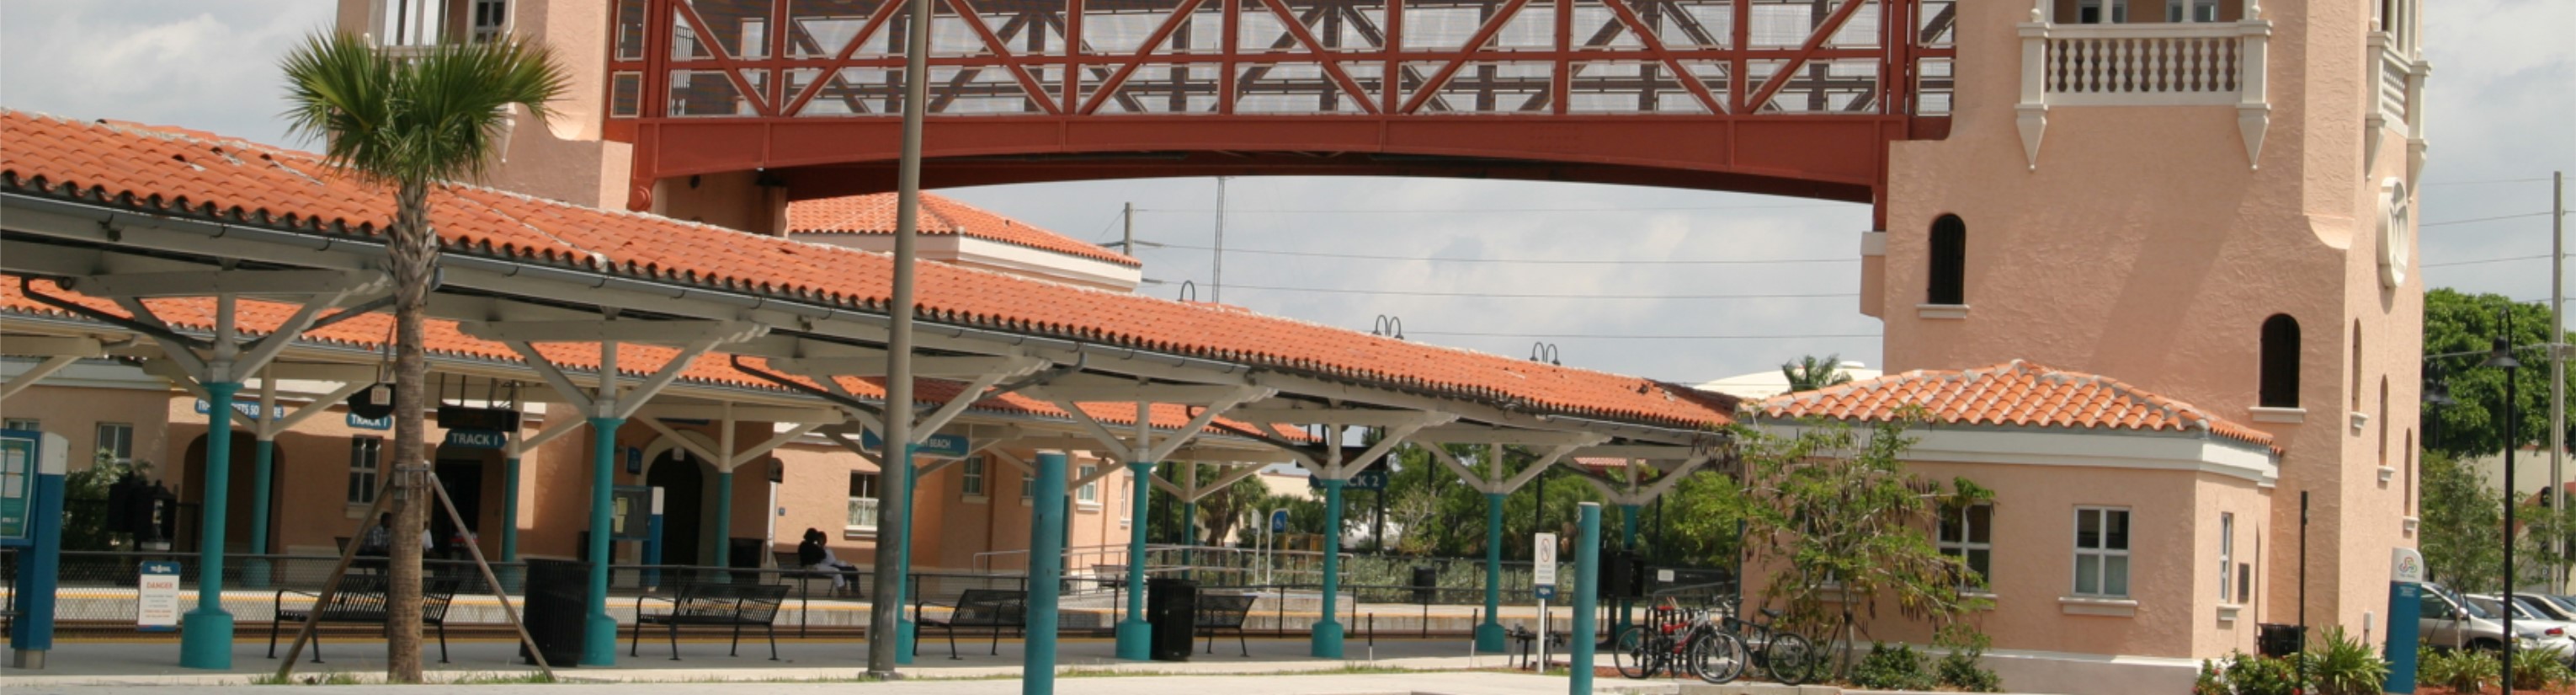 Mangonia Park Station